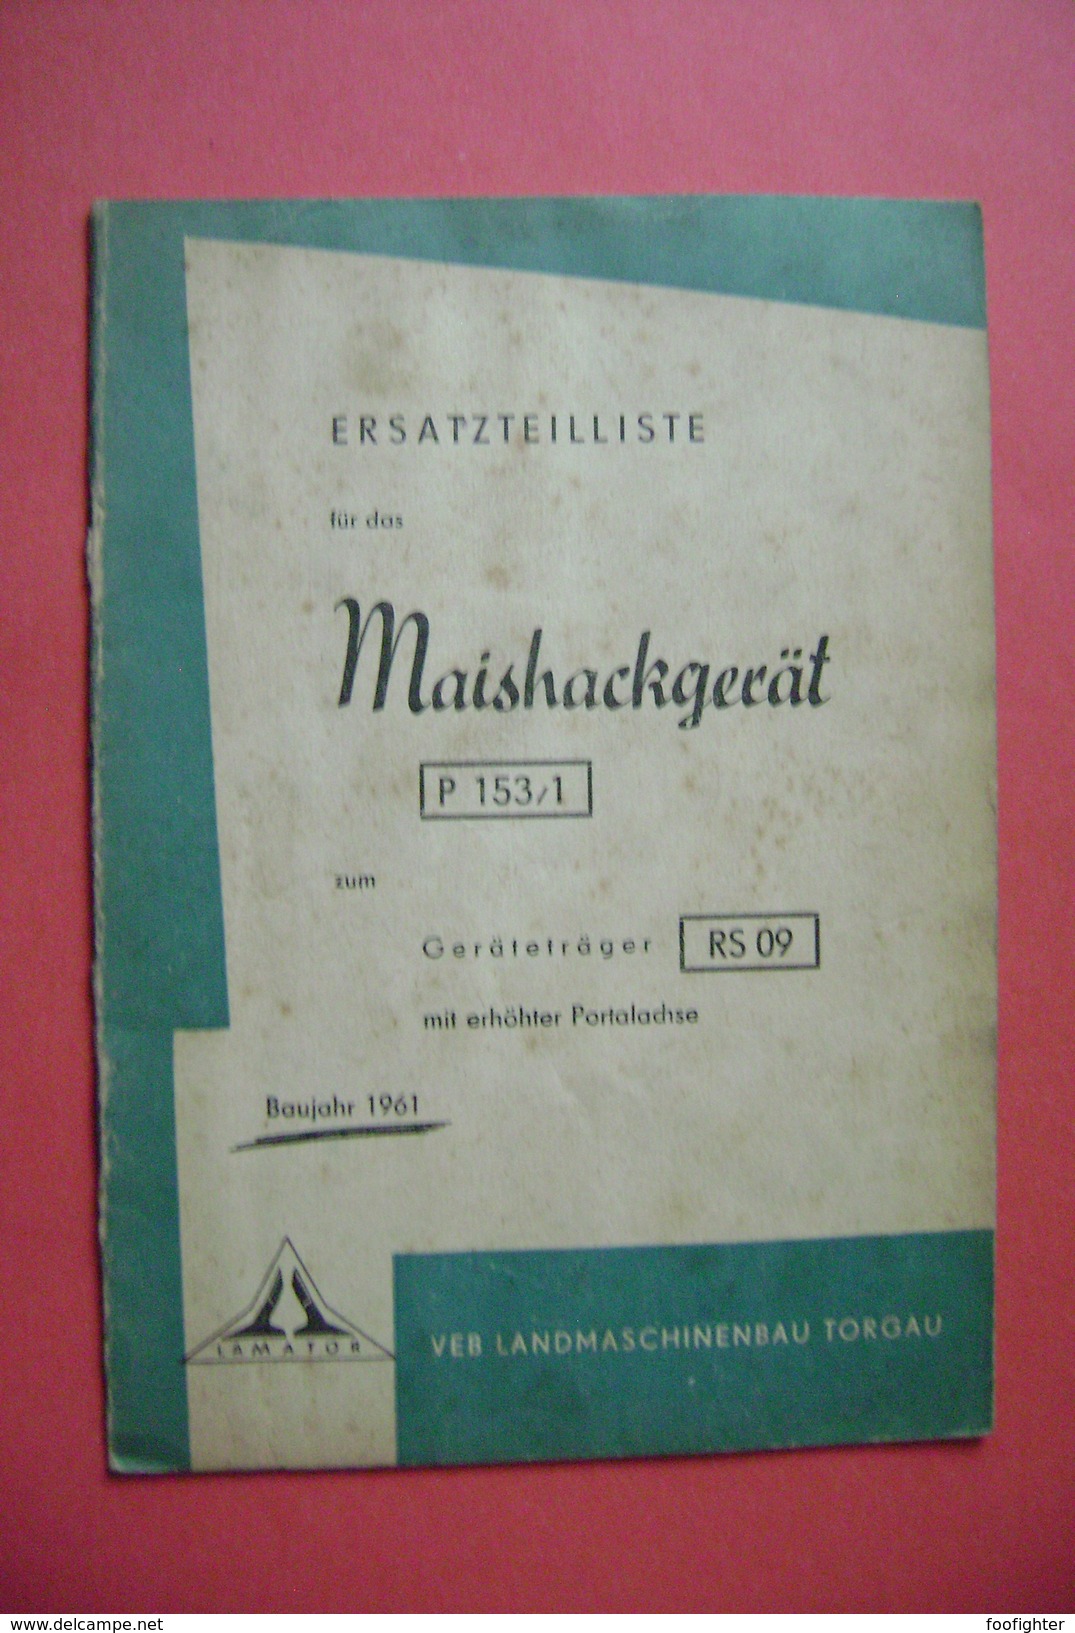 Ersatzteiliste Für Das MAISHACKGERÄT P 153/1 Zum Geräteträger RS 09 - VEB Landmaschinenbau Torgau DDR 1961 - Kataloge